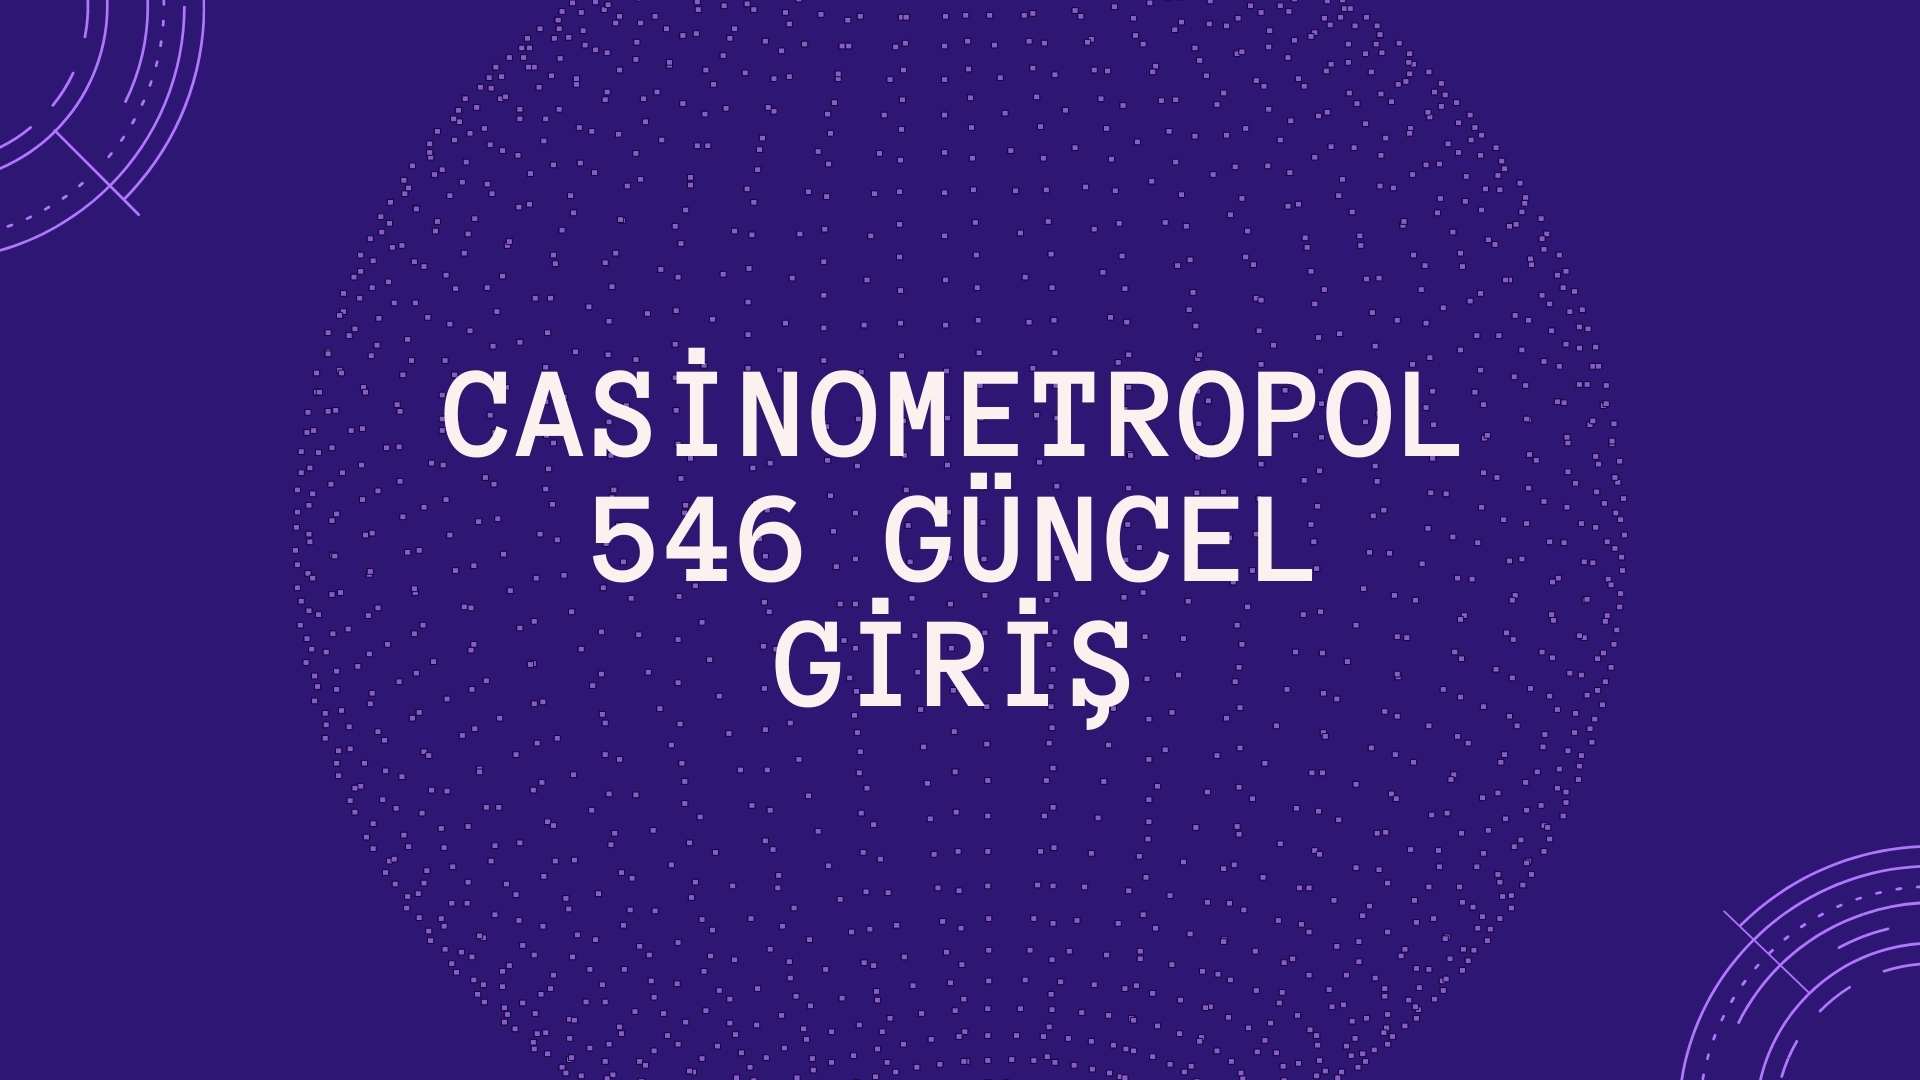 casinometropol-546-guncel-giris.jpg